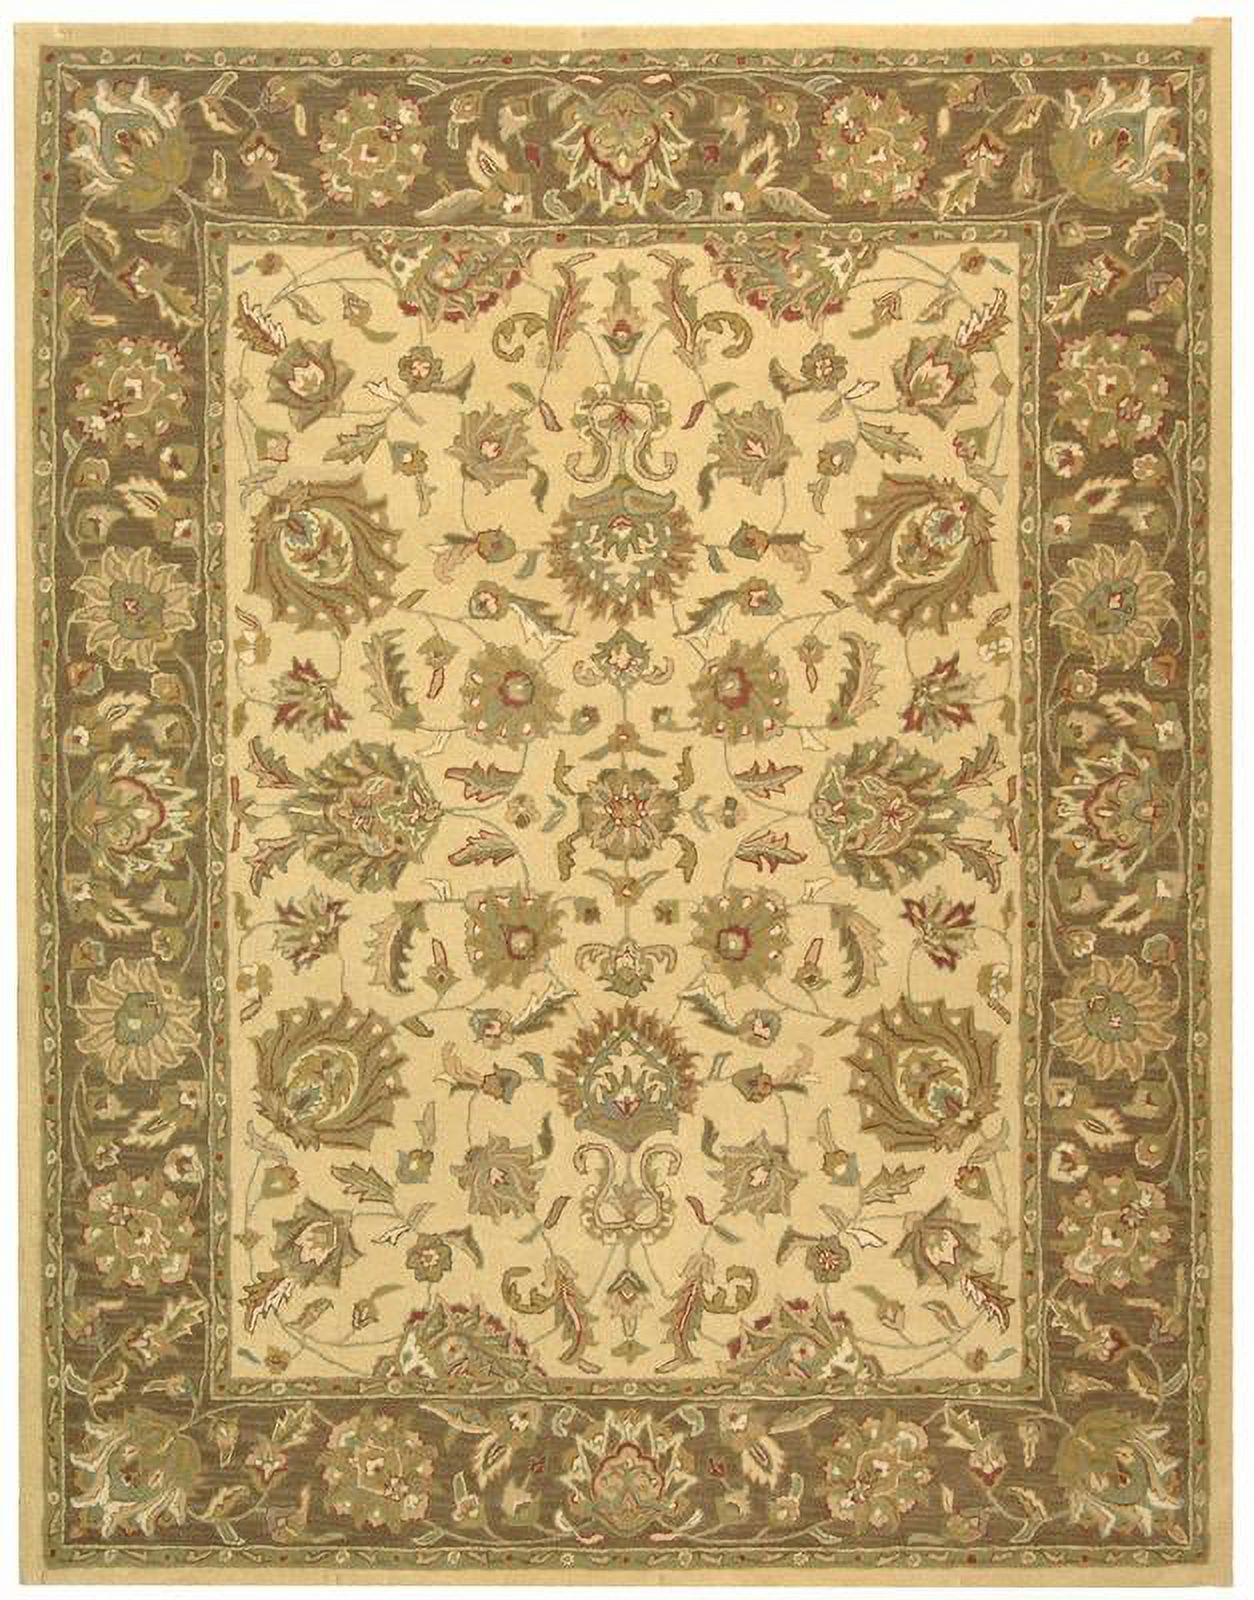 SAFAVIEH Heritage Regis Traditional Wool Area Rug, Ivory/Brown, 8'3" x 11' - image 1 of 4